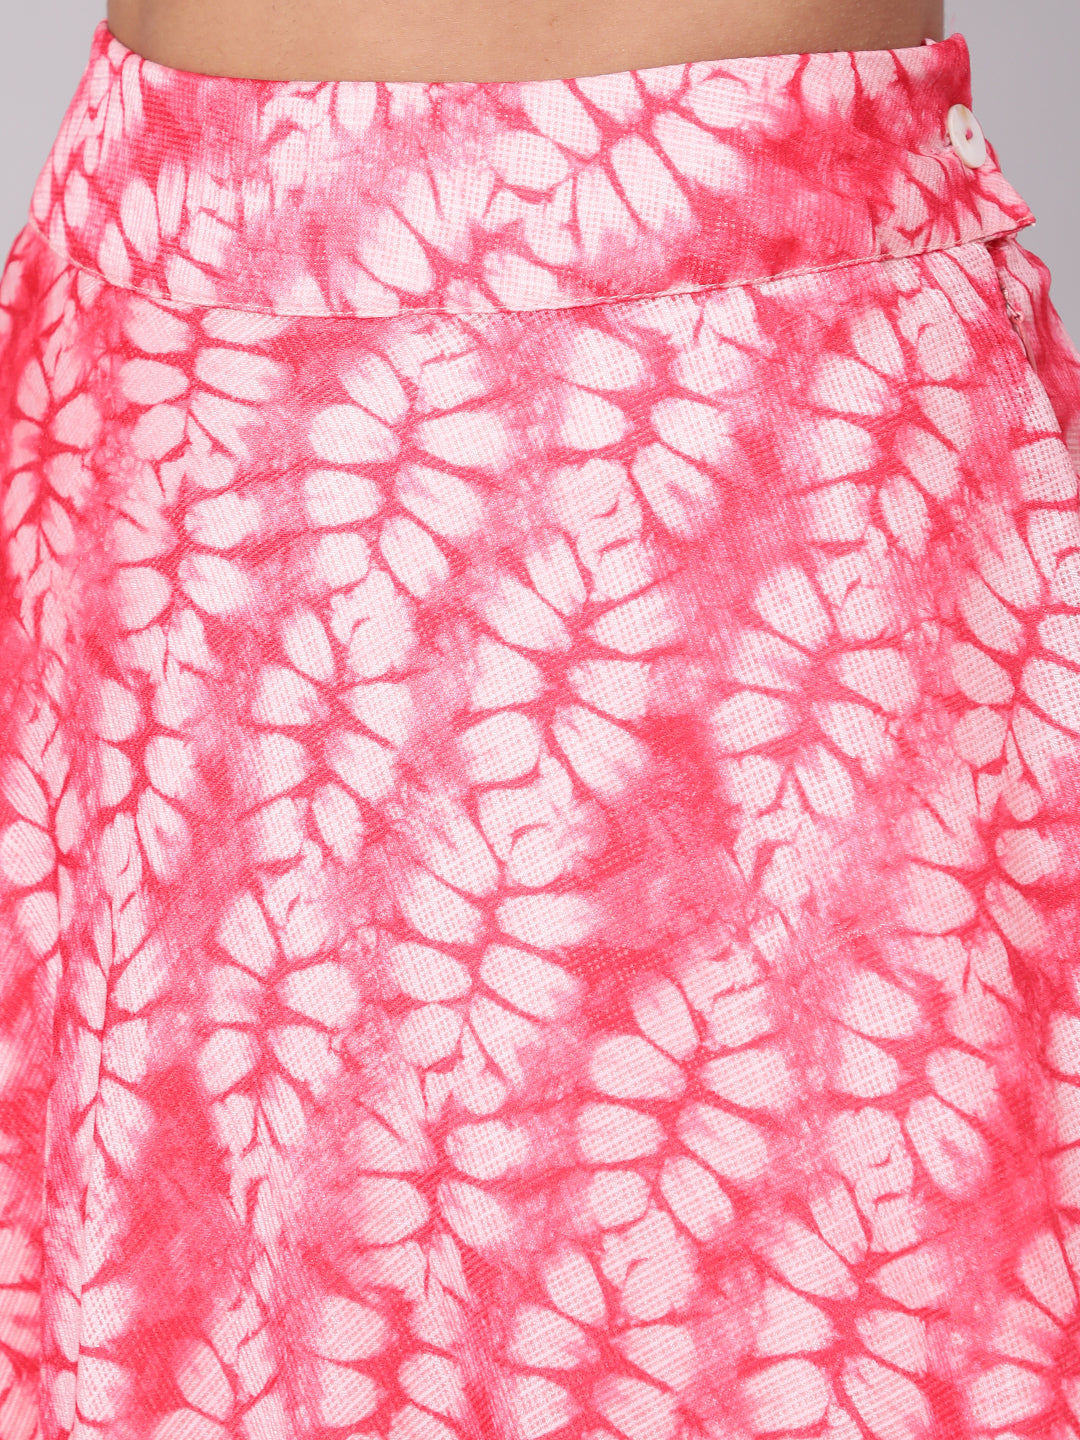 Pink Floral Print Lehenga Choli With Jacket